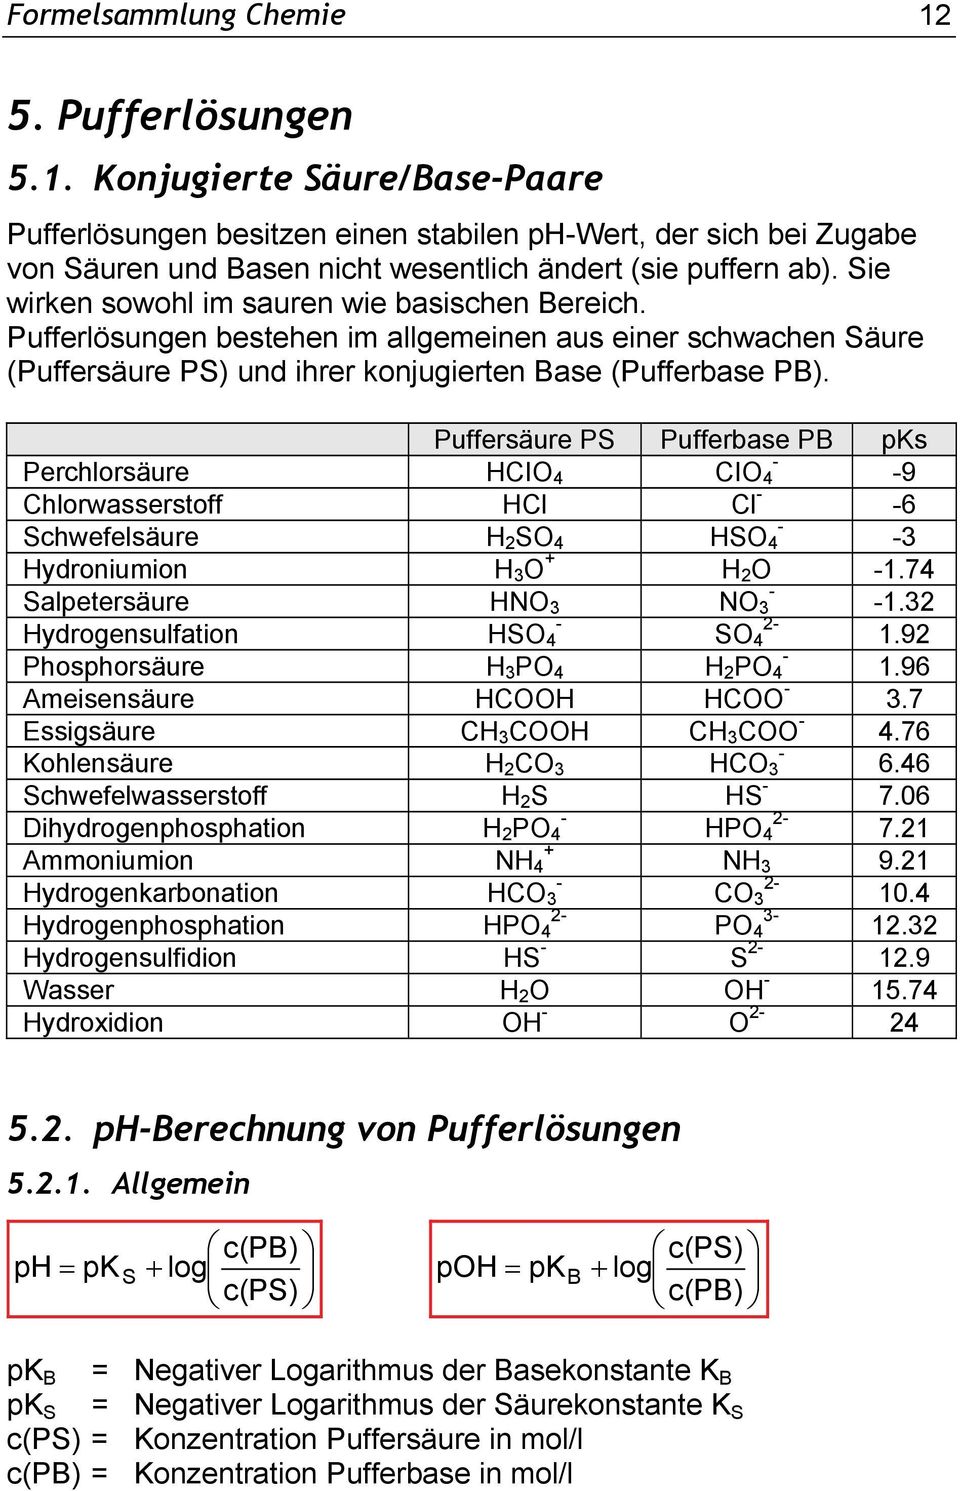 Puffersäure PS Pufferbase PB pks Perchlorsäure HCIO 4 - CIO 4-9 Chlorwasserstoff HCl Cl - -6 Schwefelsäure H 2 SO 4 - HSO 4-3 Hydroniumion H 3 O + H 2 O -1.74 Salpetersäure HNO 3 - NO 3-1.